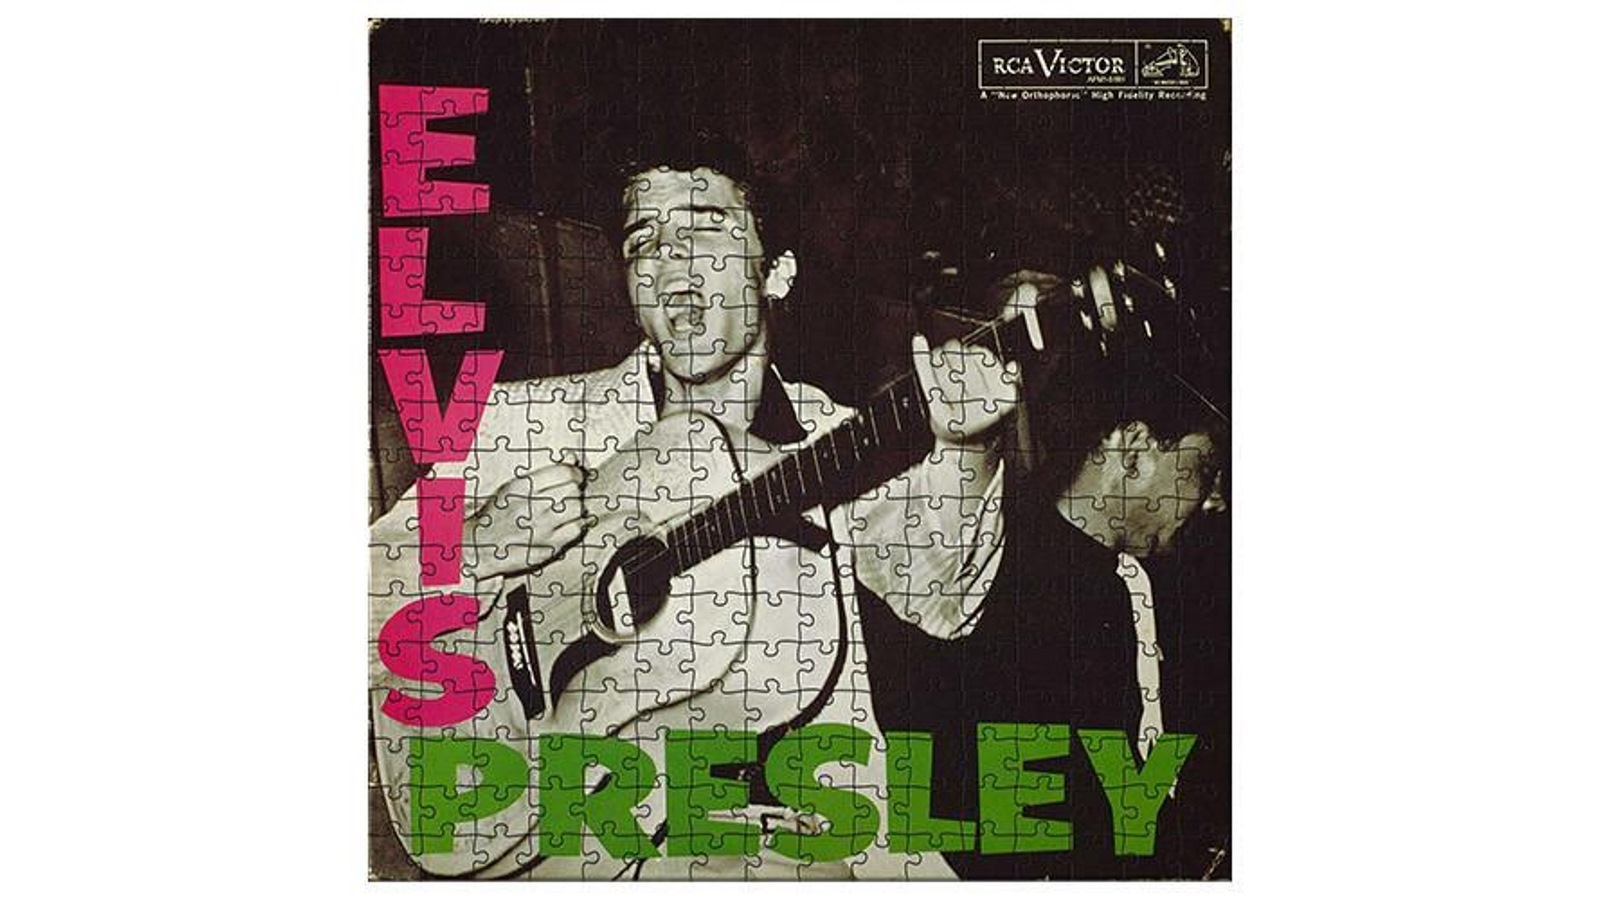 Jigsaw puzzle Entertainment Music Elvis Presley Album Covers 1000 piece NEW 